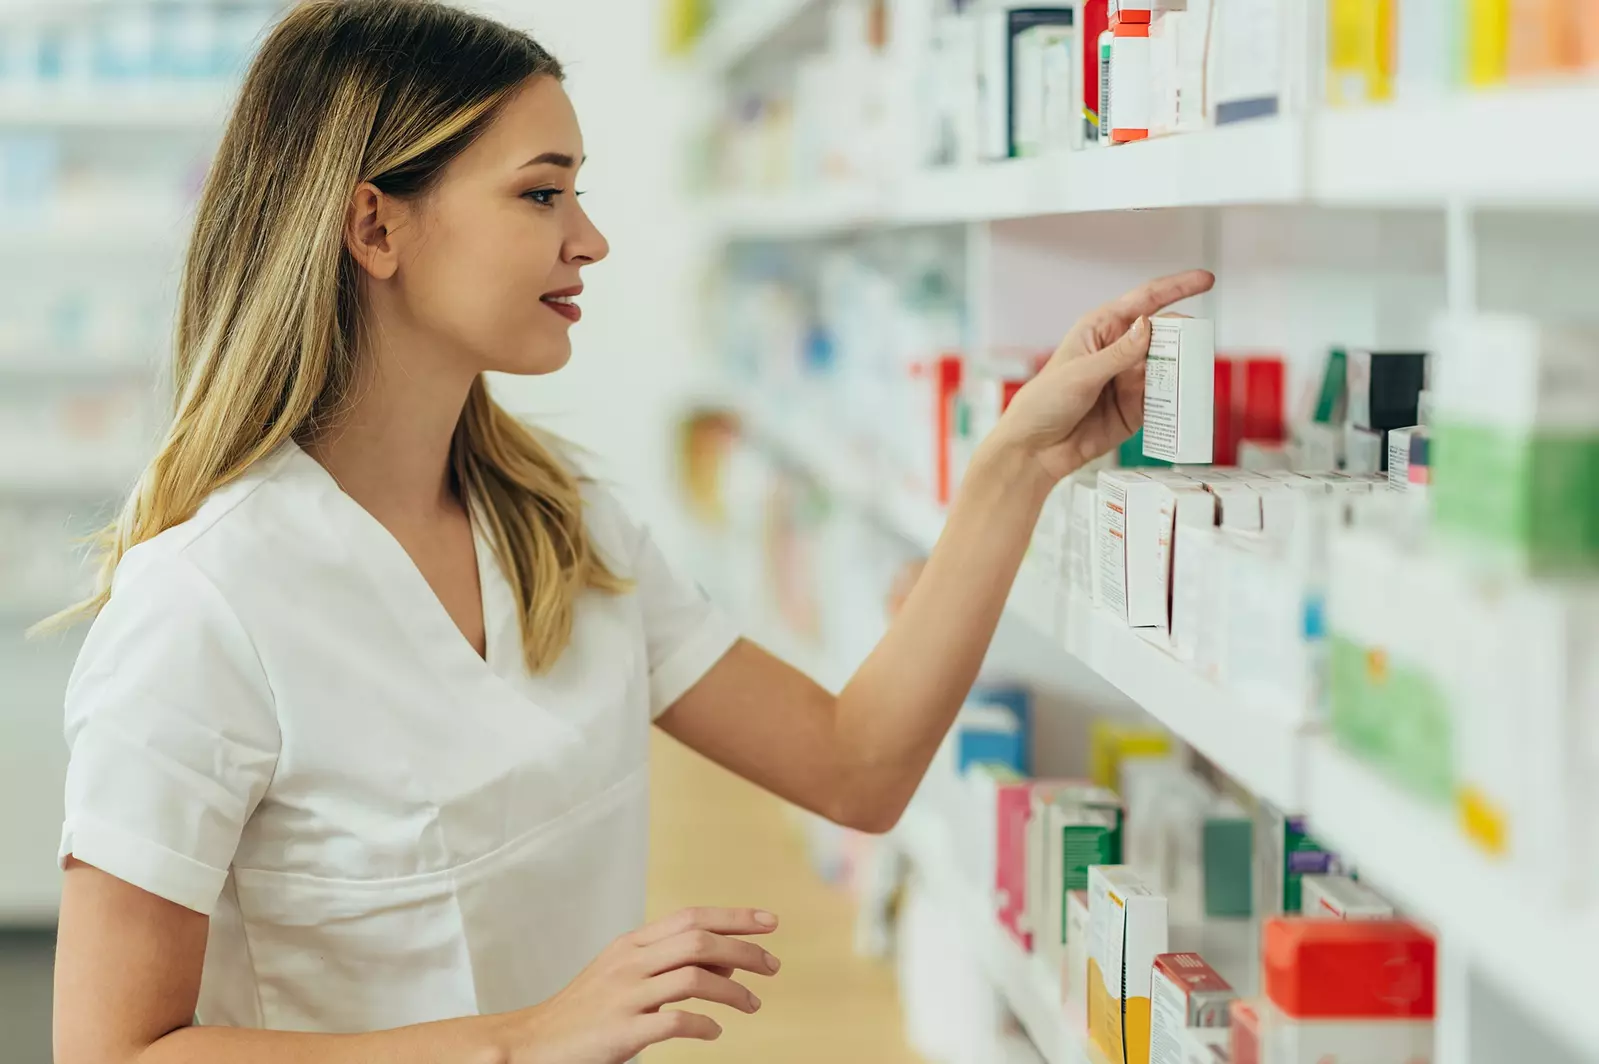 pharmacist searching for prescription